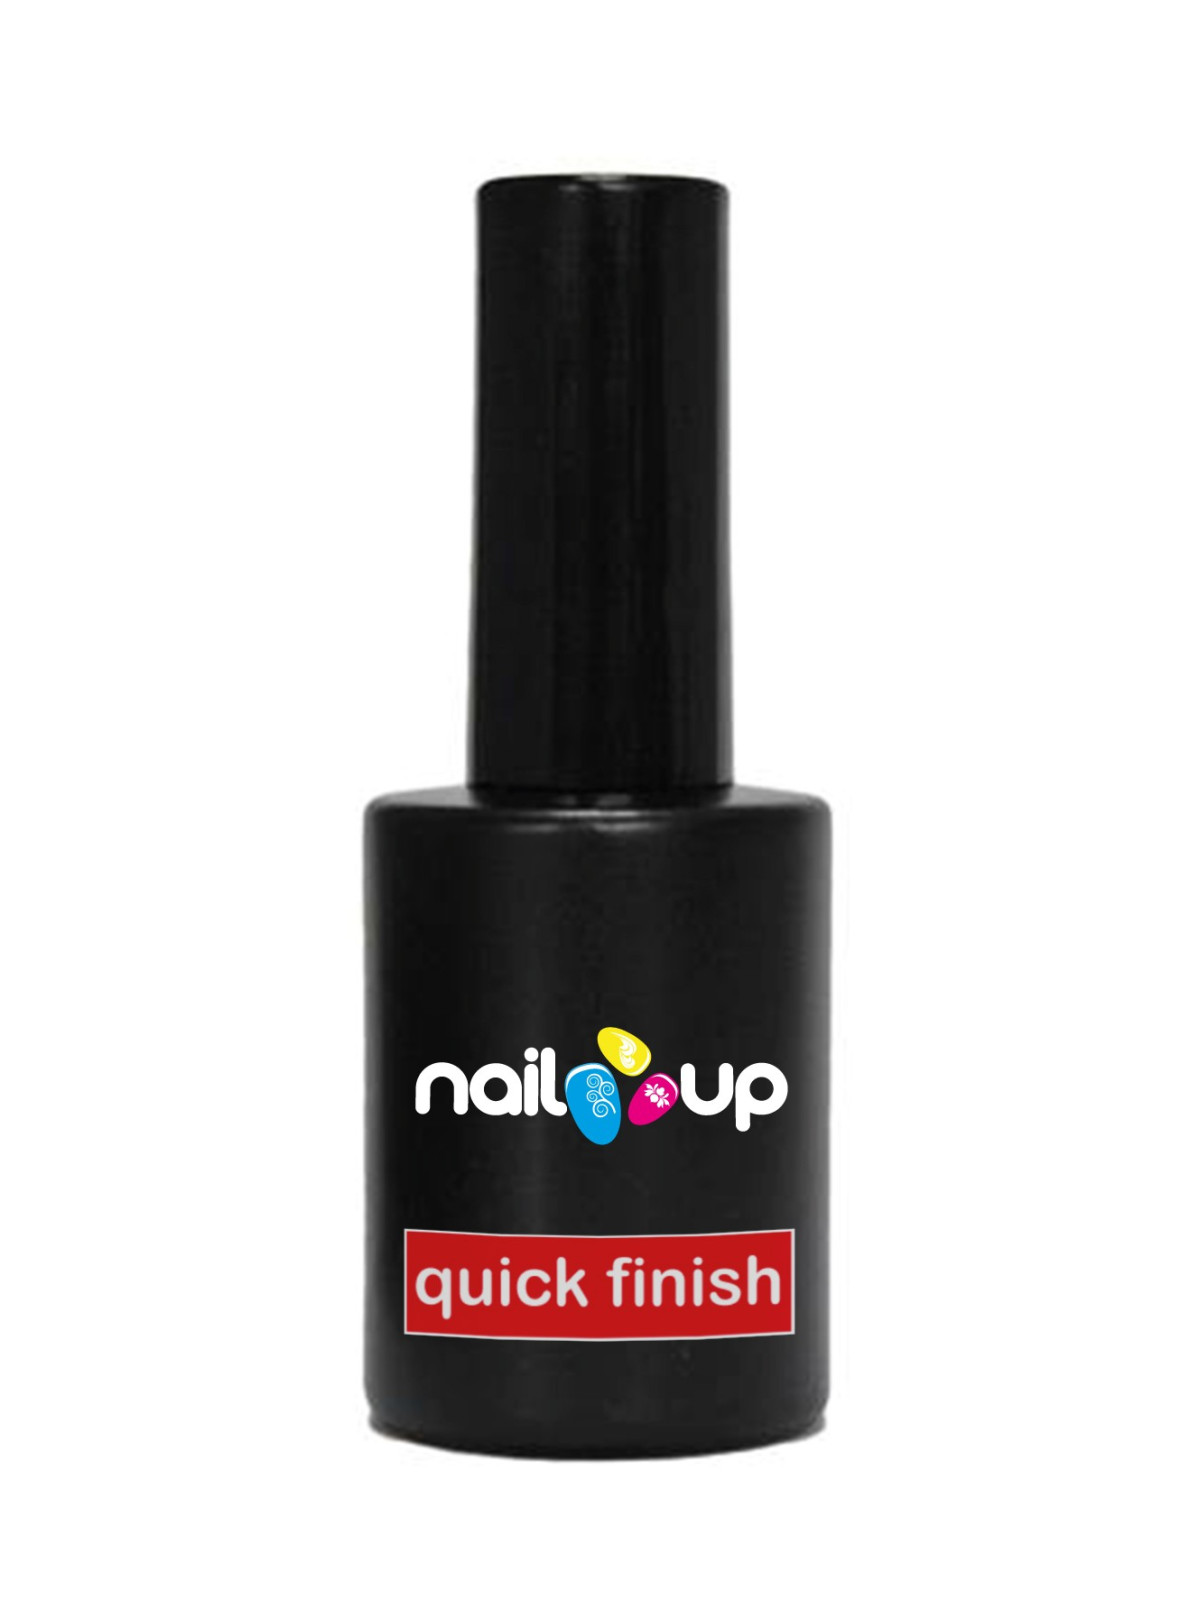 NailUp Quick finish 15 ml 12,00 €